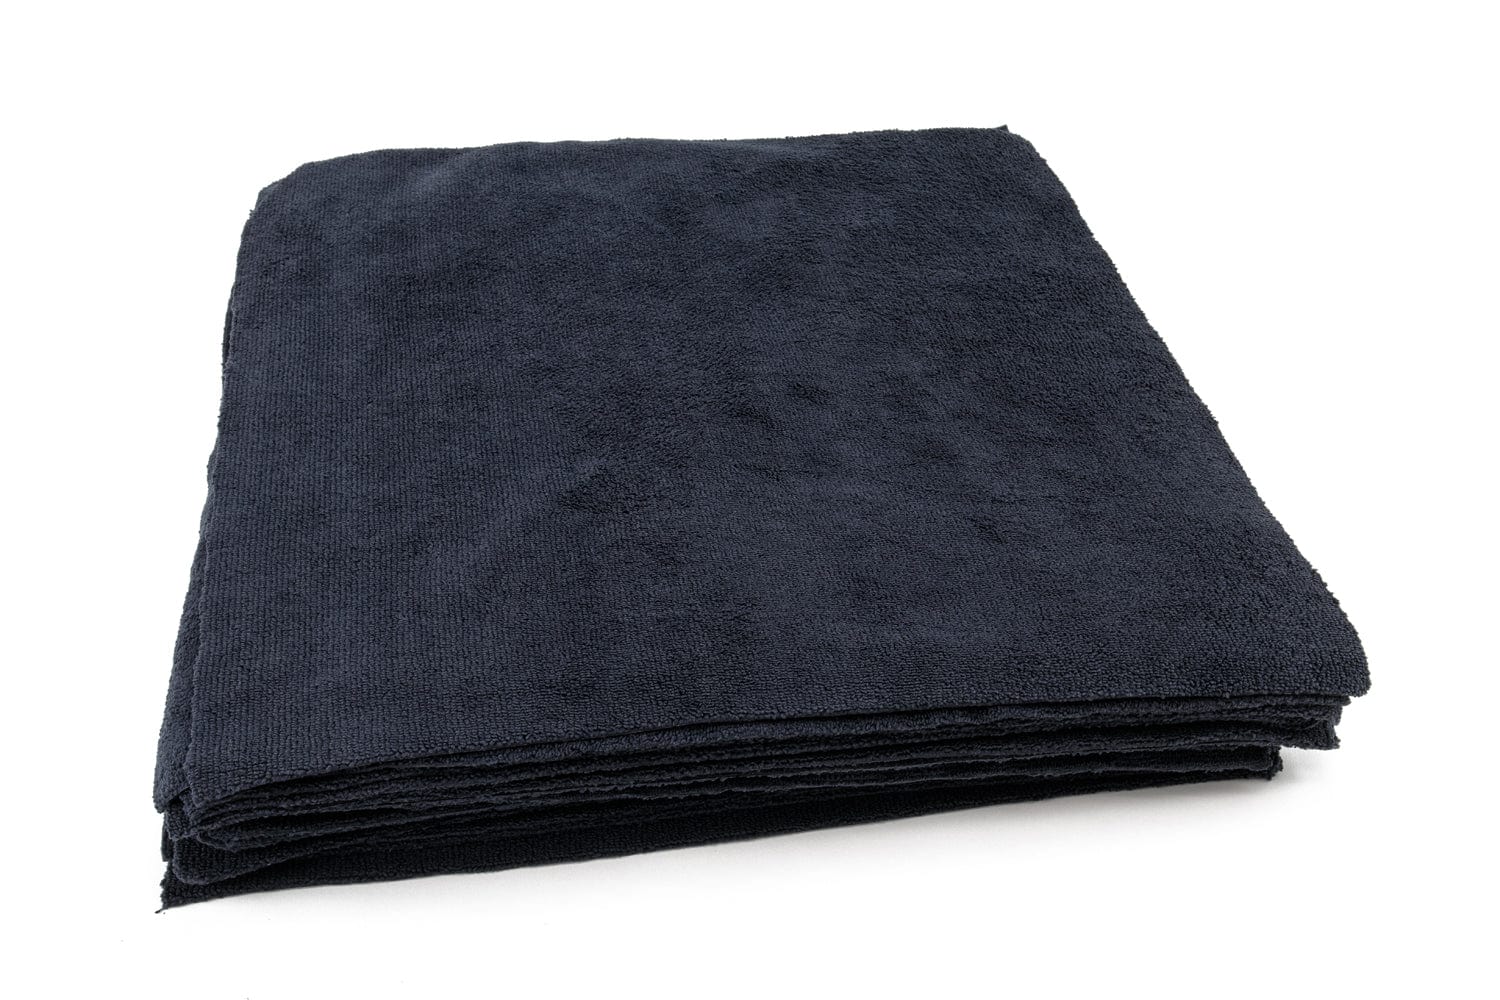 Autofiber Towel Black [Utility 400v] Edgeless Microfiber Cleaning Towel 16"x16" - 20/Vacuum Pack